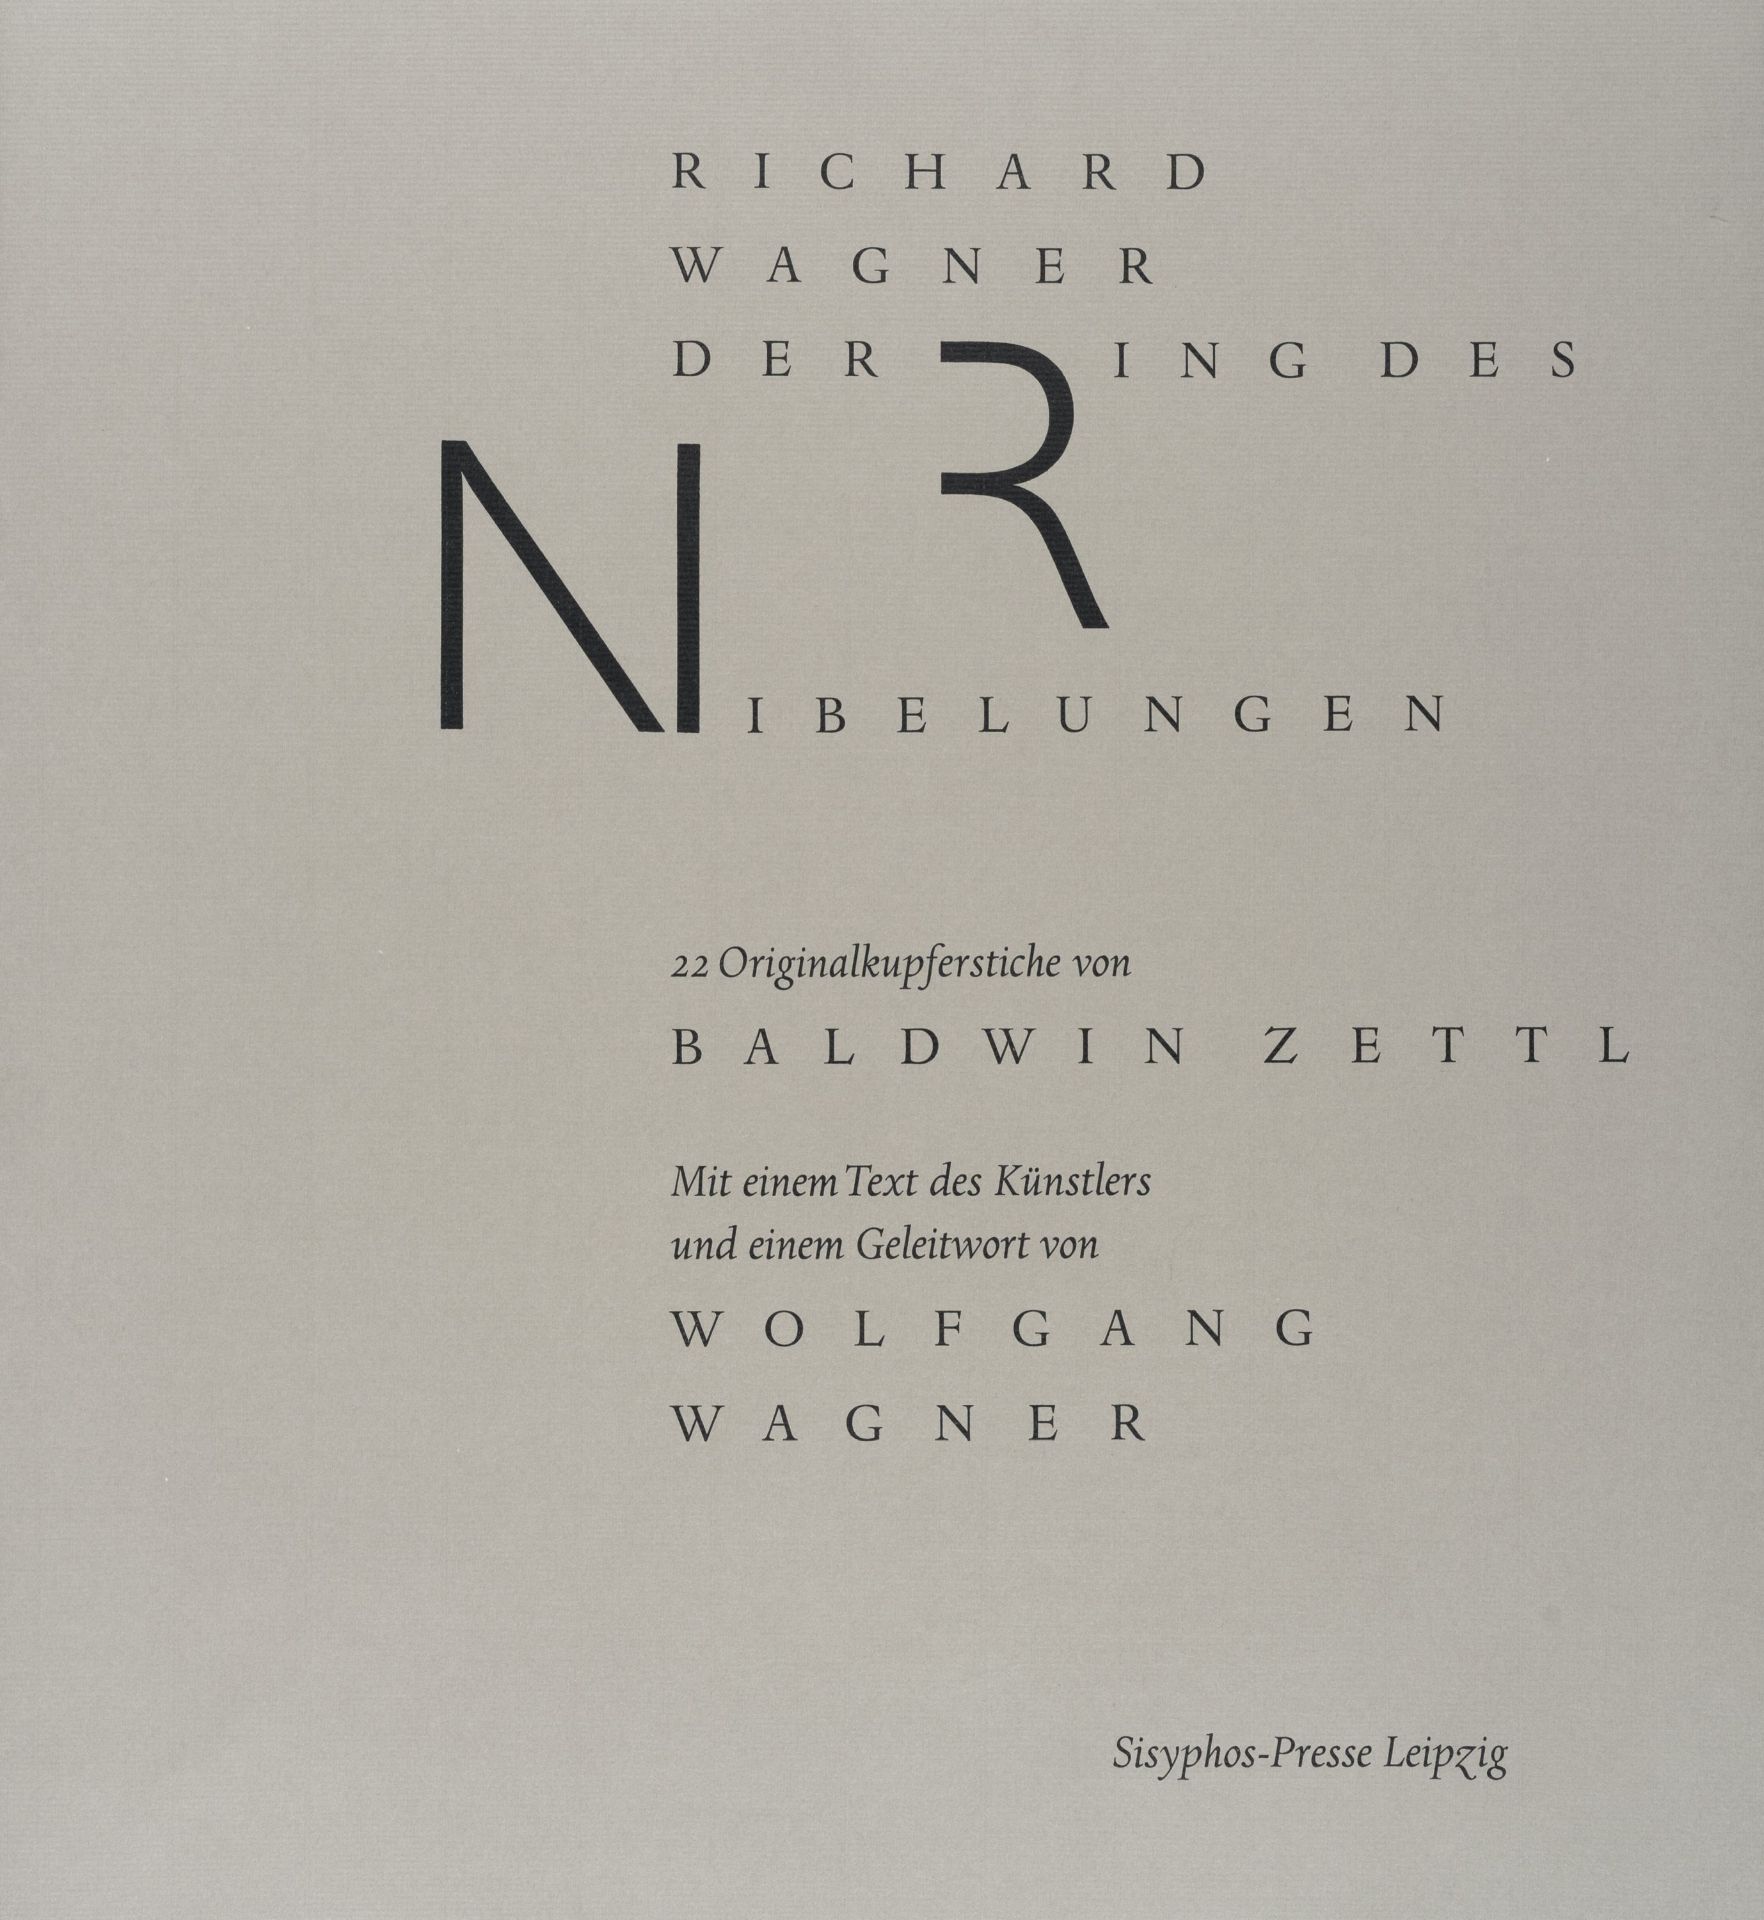 Baldwin Zettl "Der Ring des Nibelungen". 1991– 1998. - Bild 2 aus 26